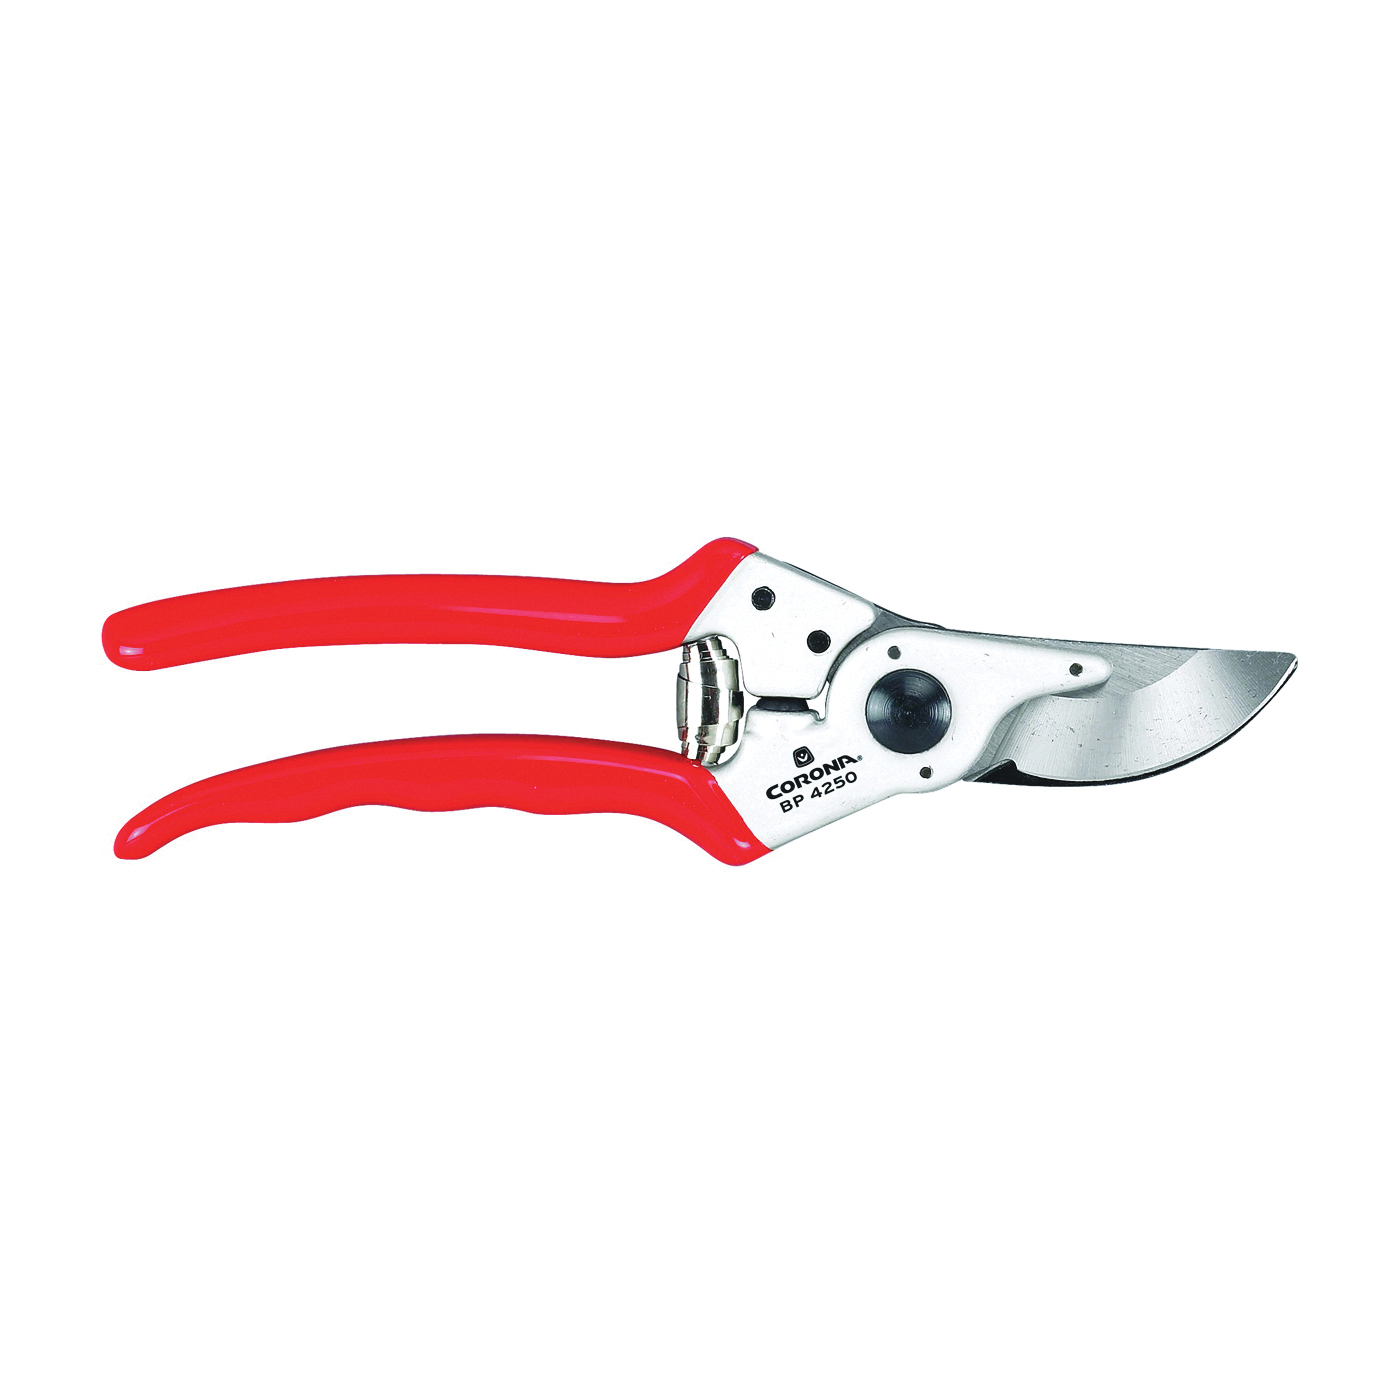 BP 4250 Pruning Shear, 1 in Cutting Capacity, HCS Blade, Bypass Blade, Aluminum Handle